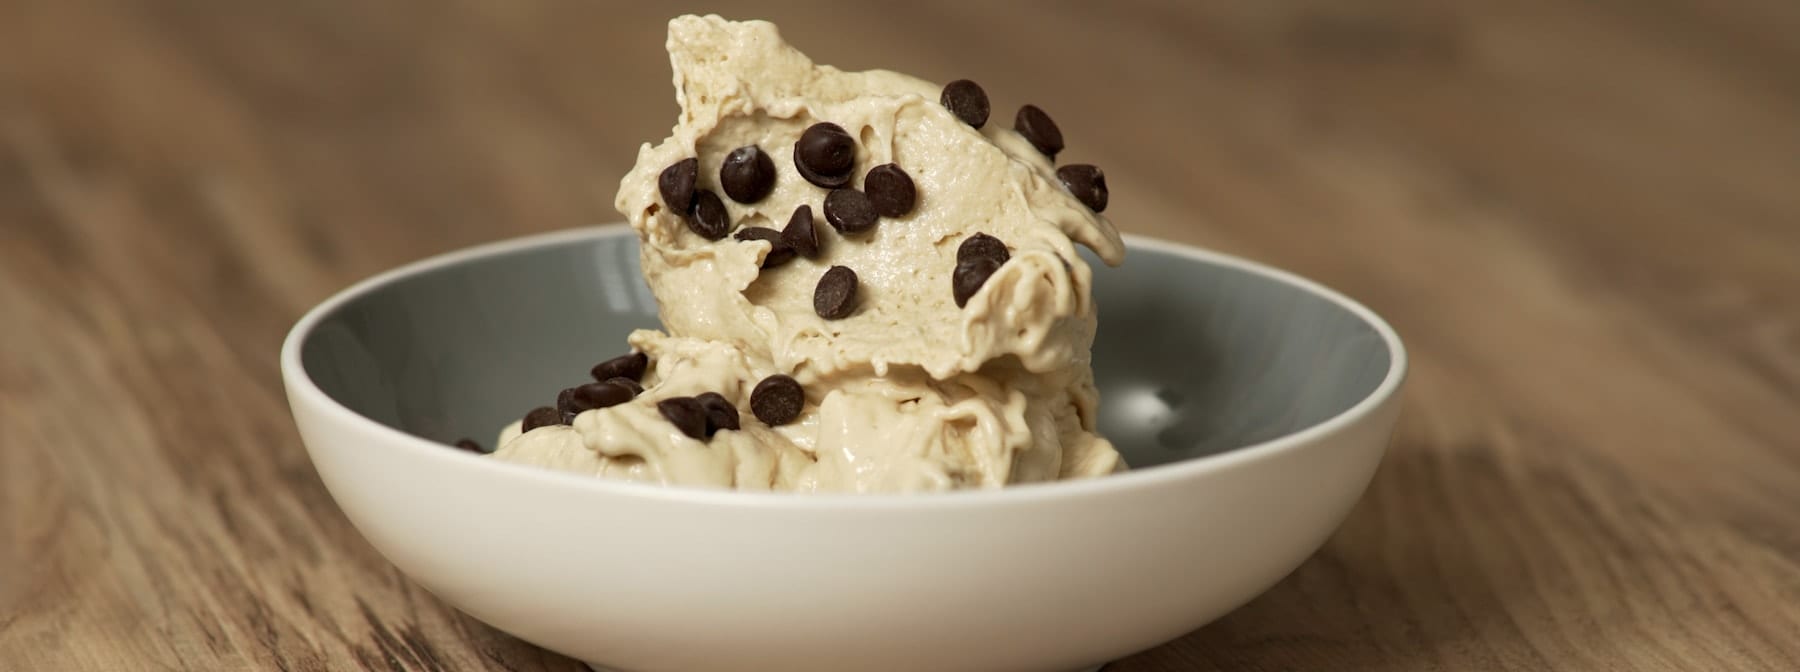 3-Ingredient Healthy Ice Cream | Banana & Peanut Butter